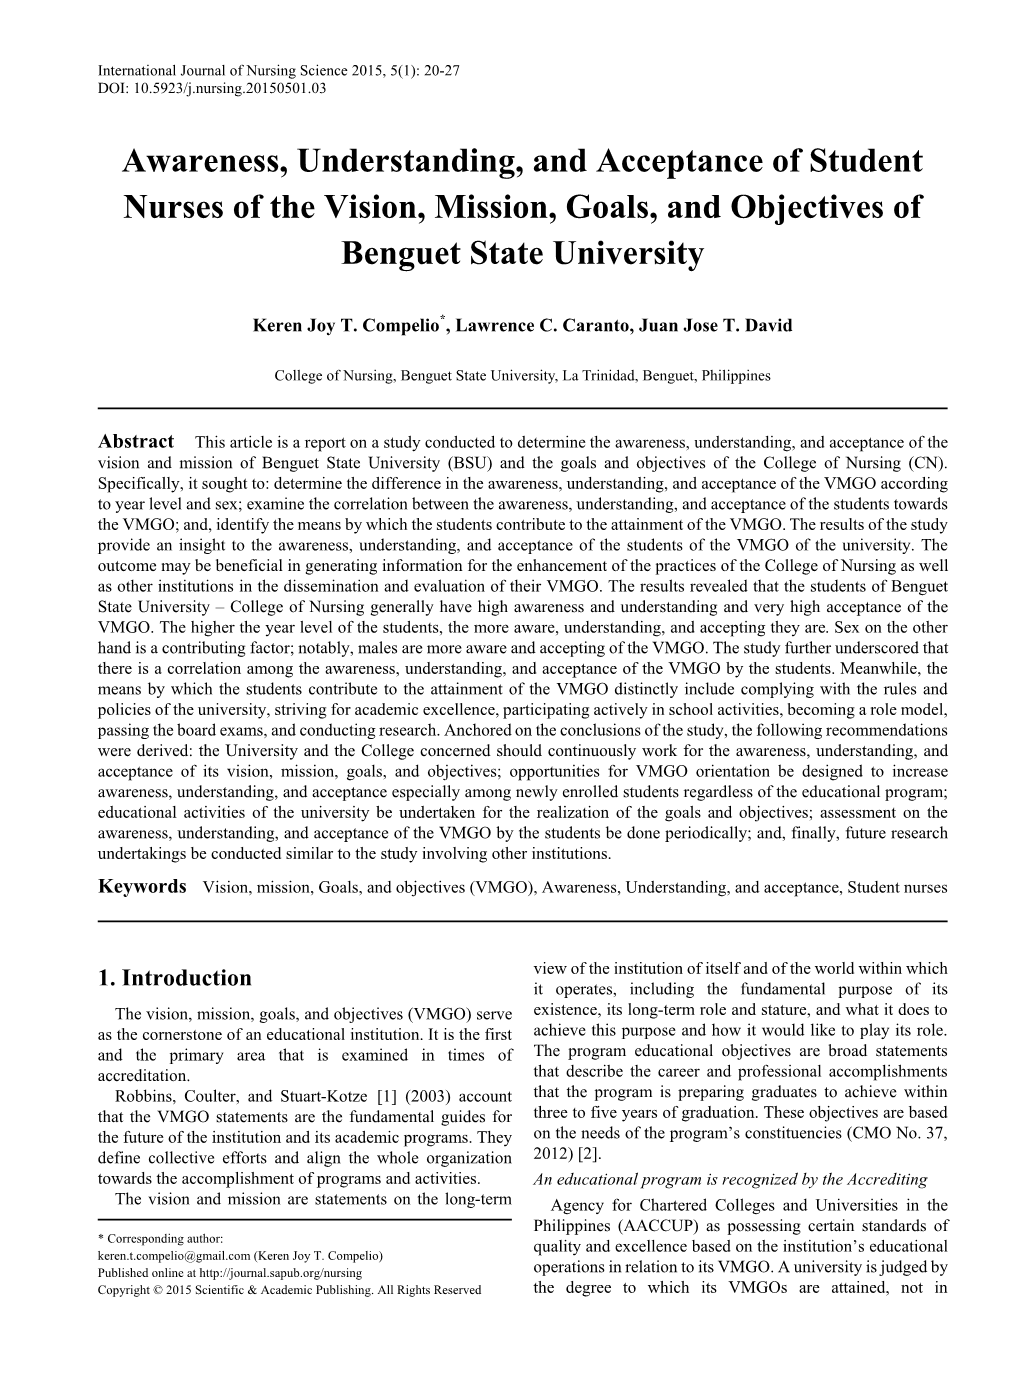 (VMGO), Awareness, Understanding, and Acceptance, Student Nurses